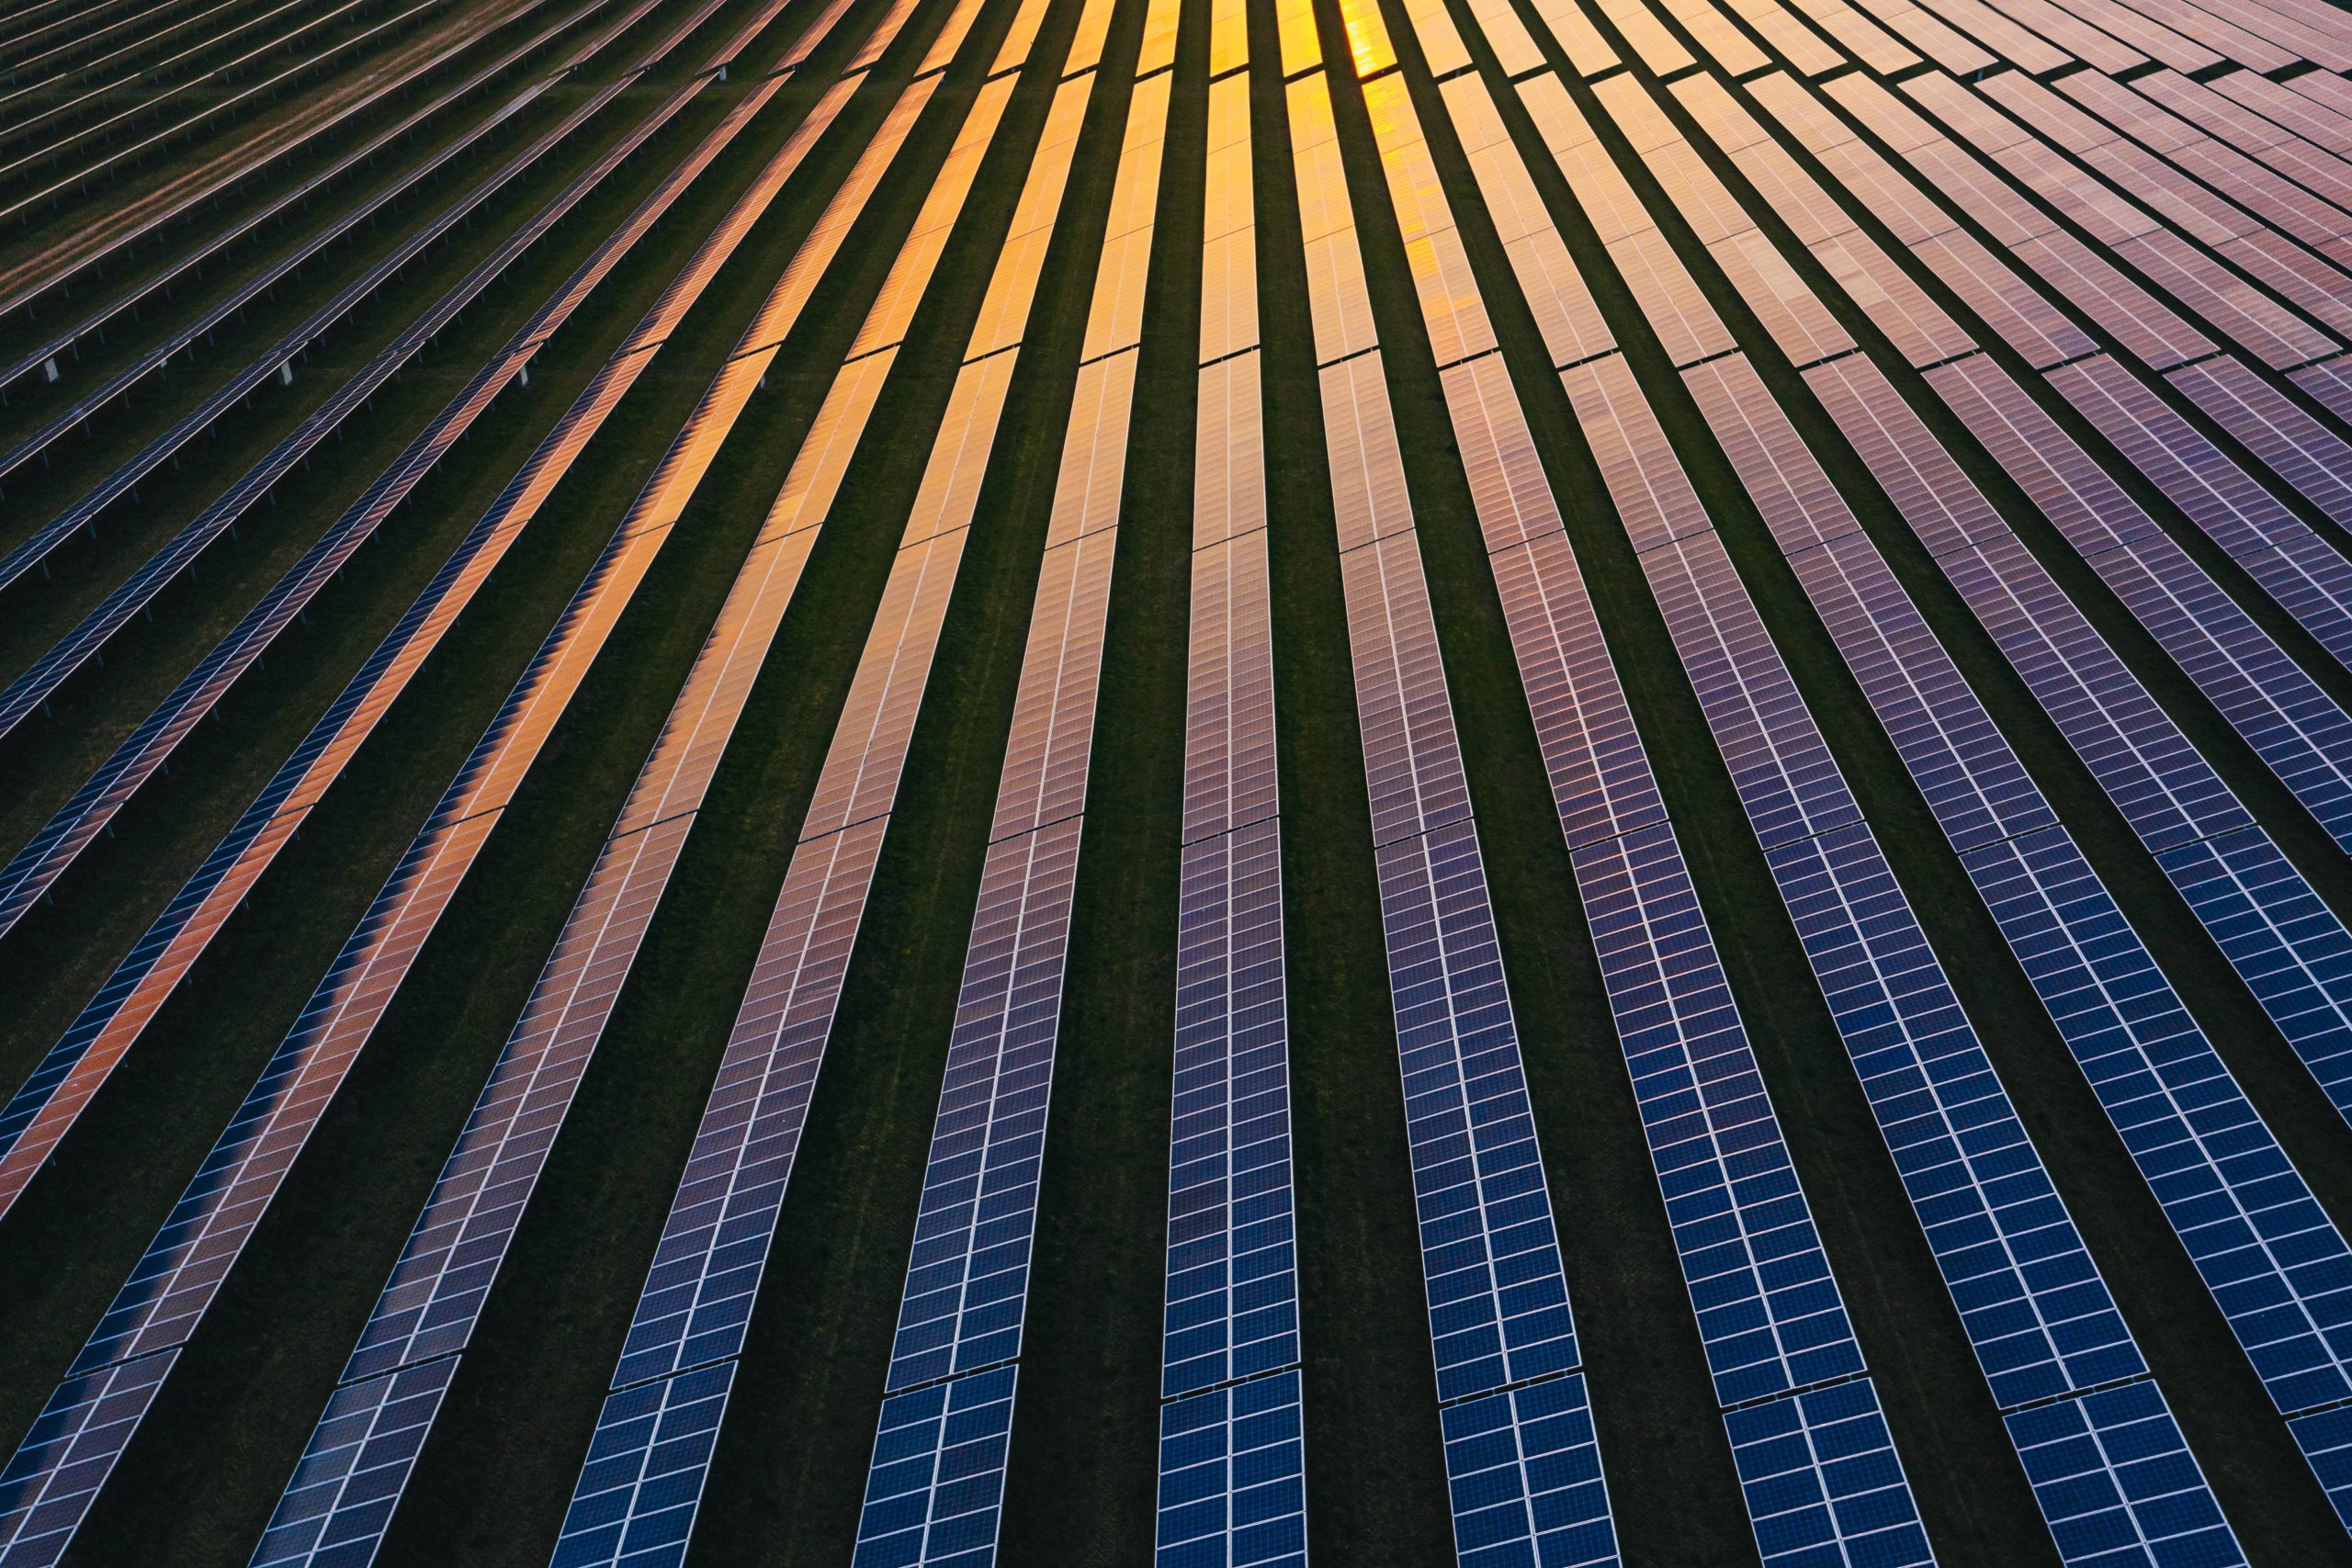 Solar panels at dusk